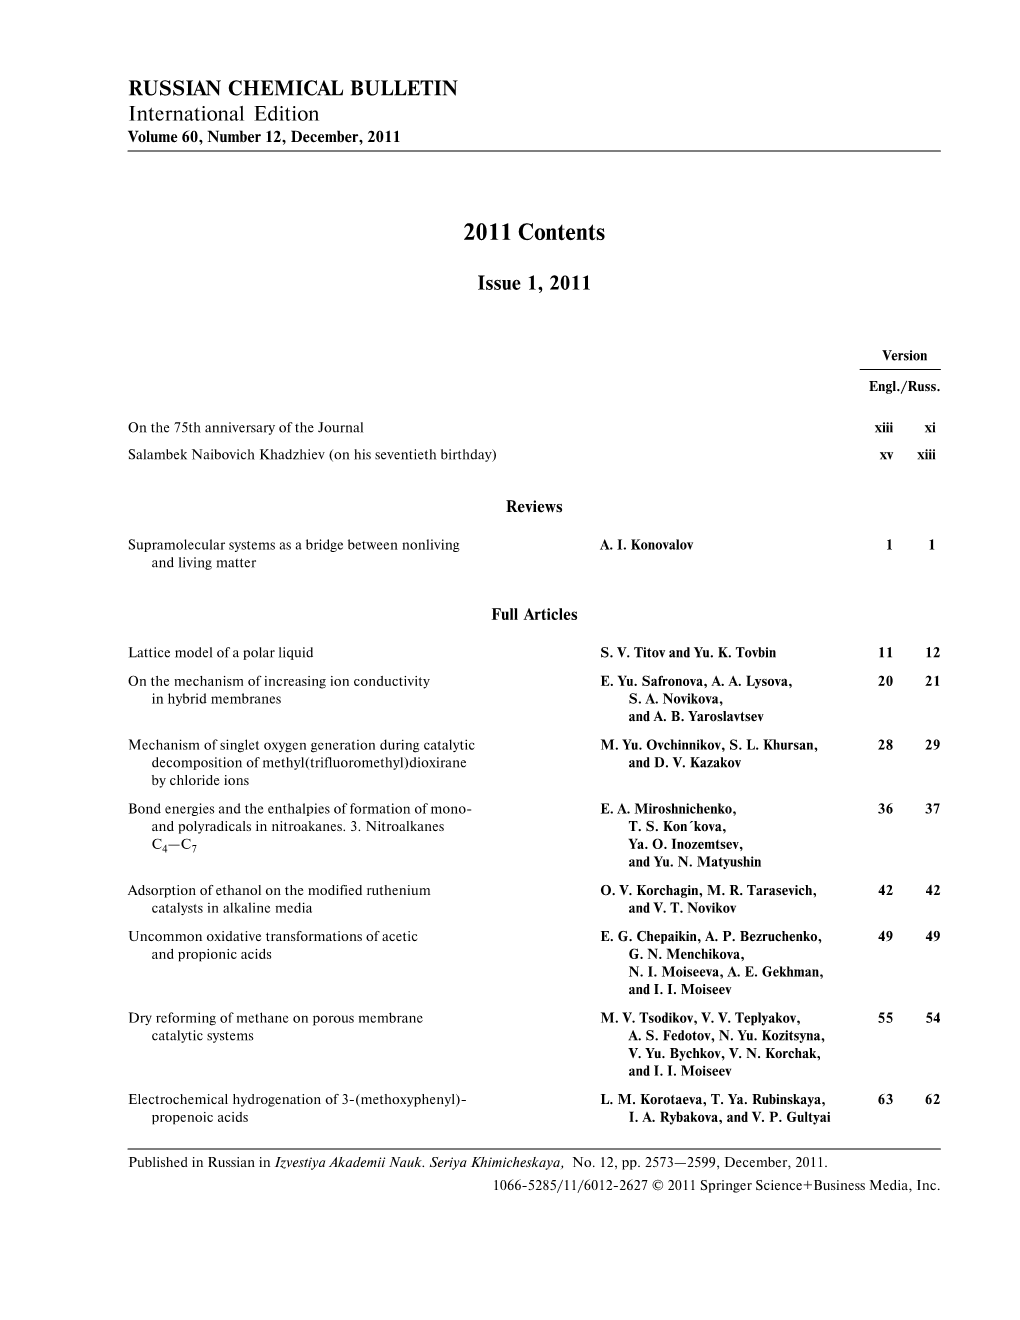 Contents (PDF)